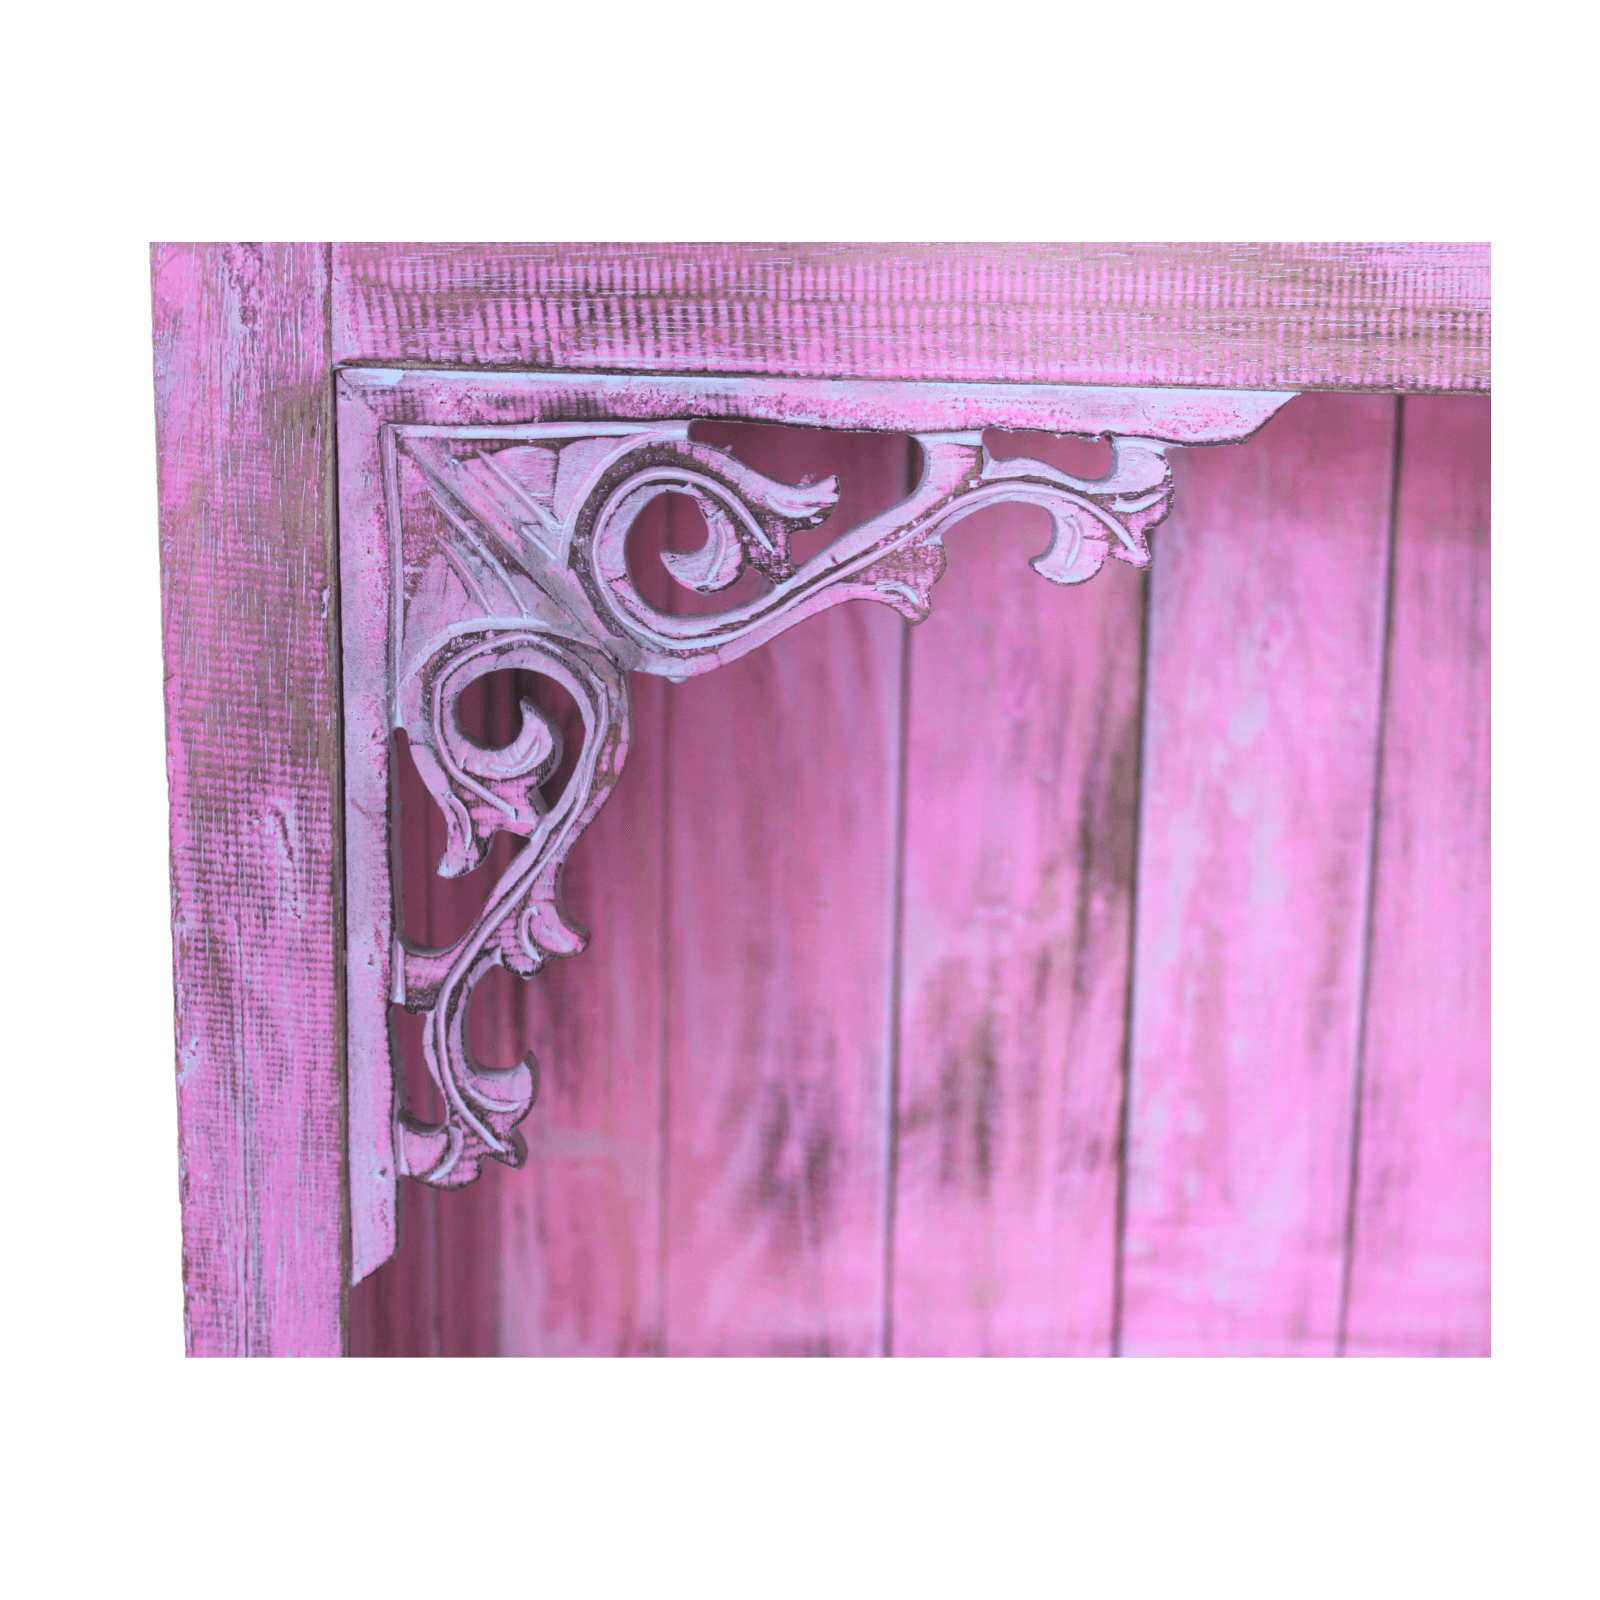 Freestanding Bathroom Cabinet - Pinkwash - Charming Spaces